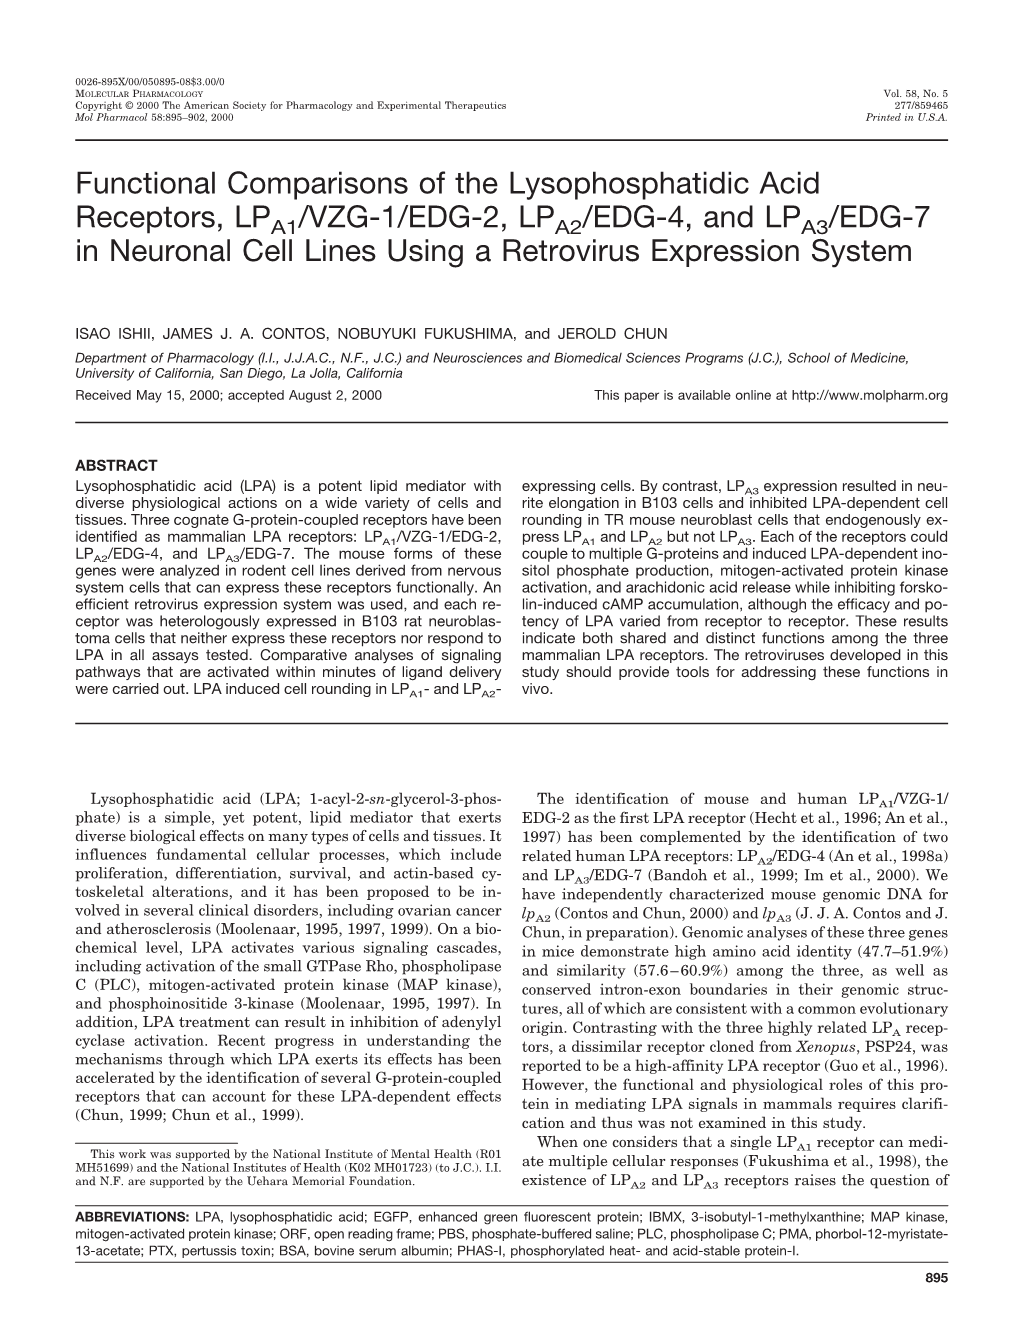 Functional Comparisons of the Lysophosphatidic Acid Receptors